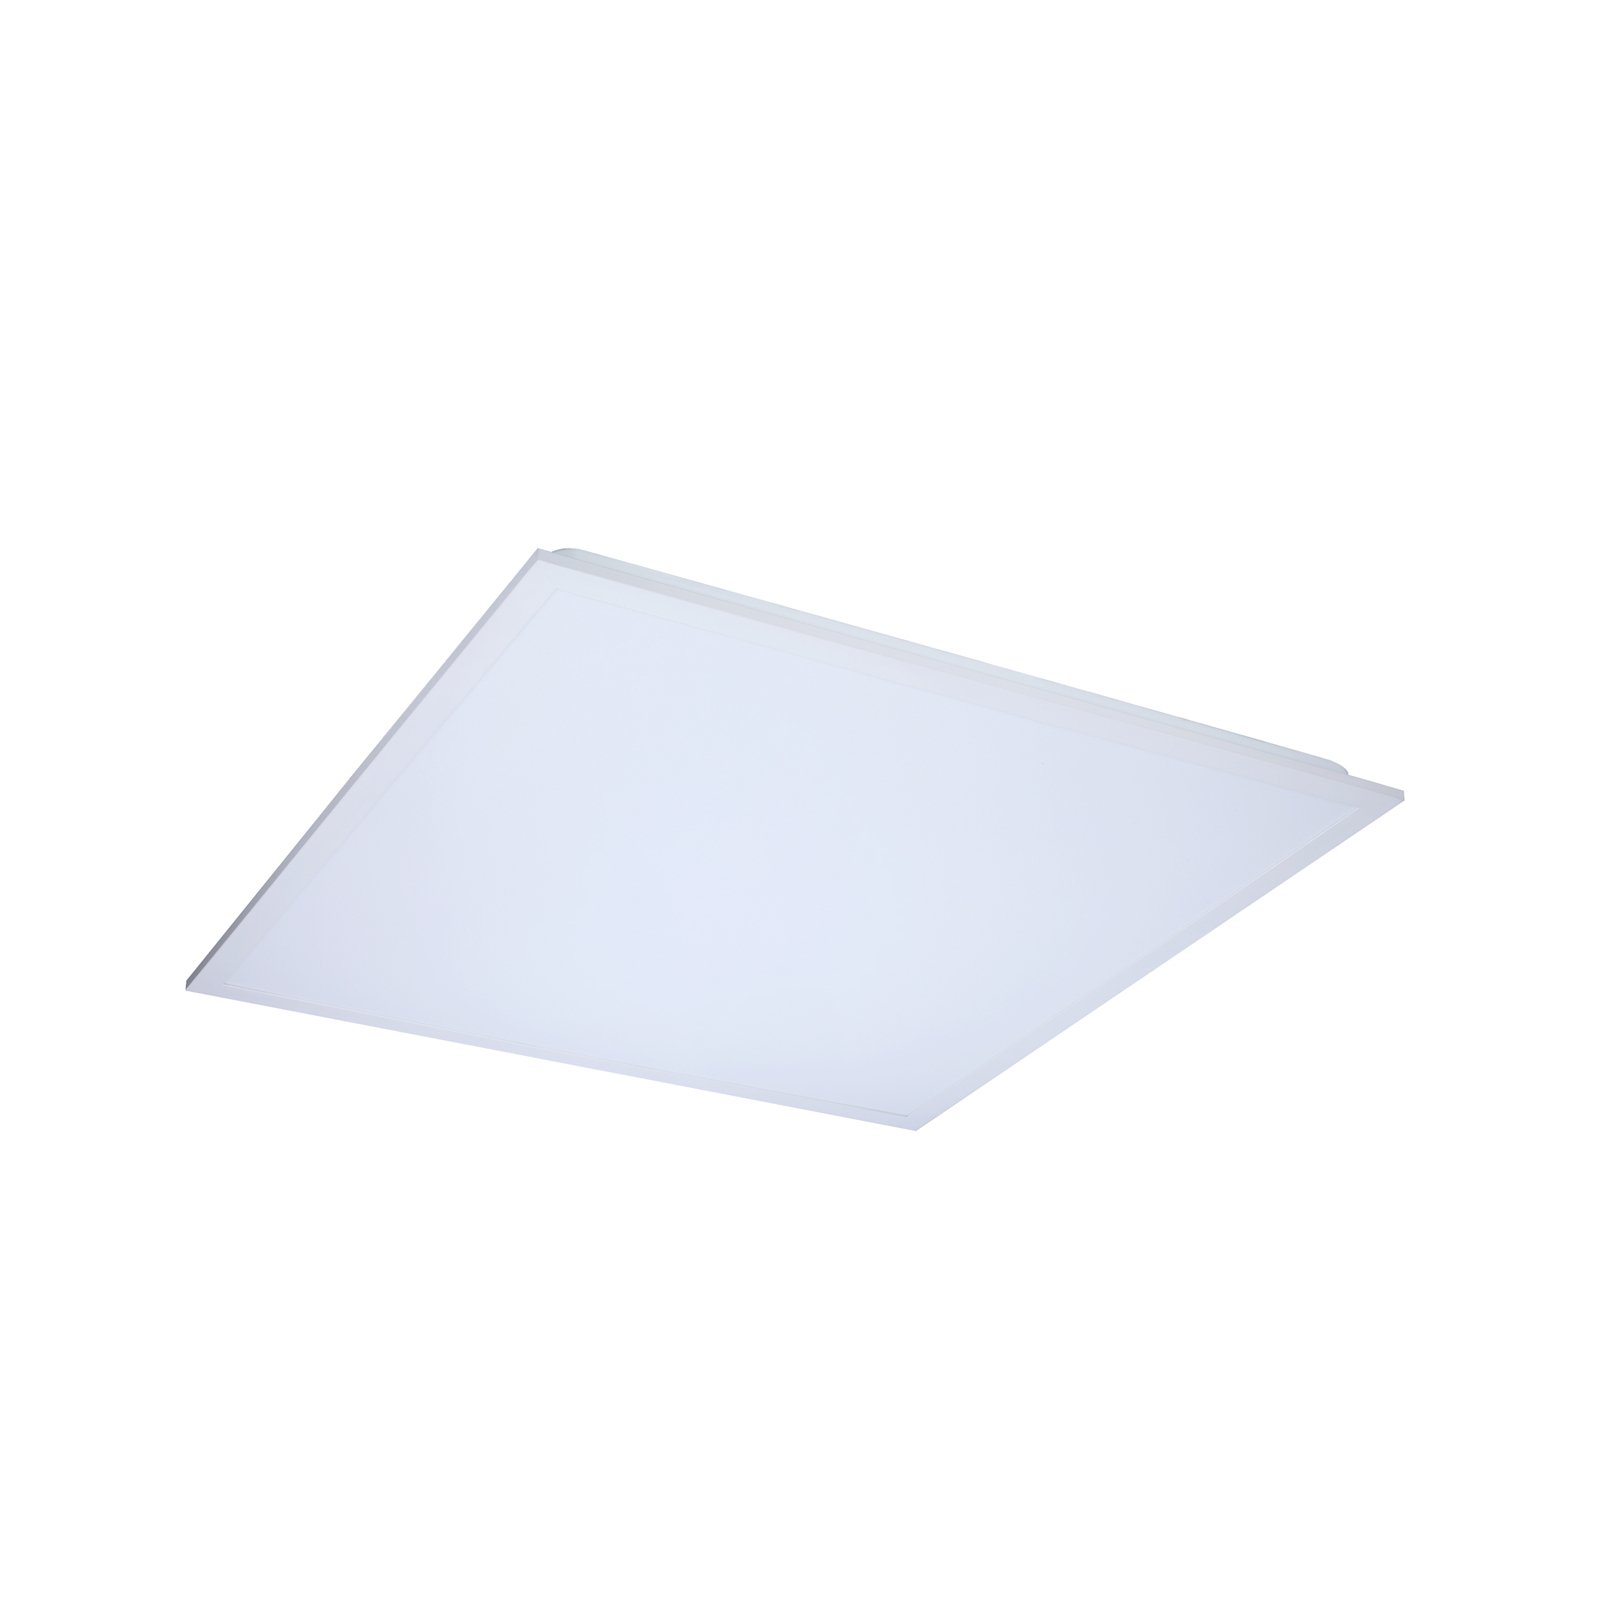 Painel LED Sylvania Start, branco, 62 x 62 cm, 30 W, UGR19, 830